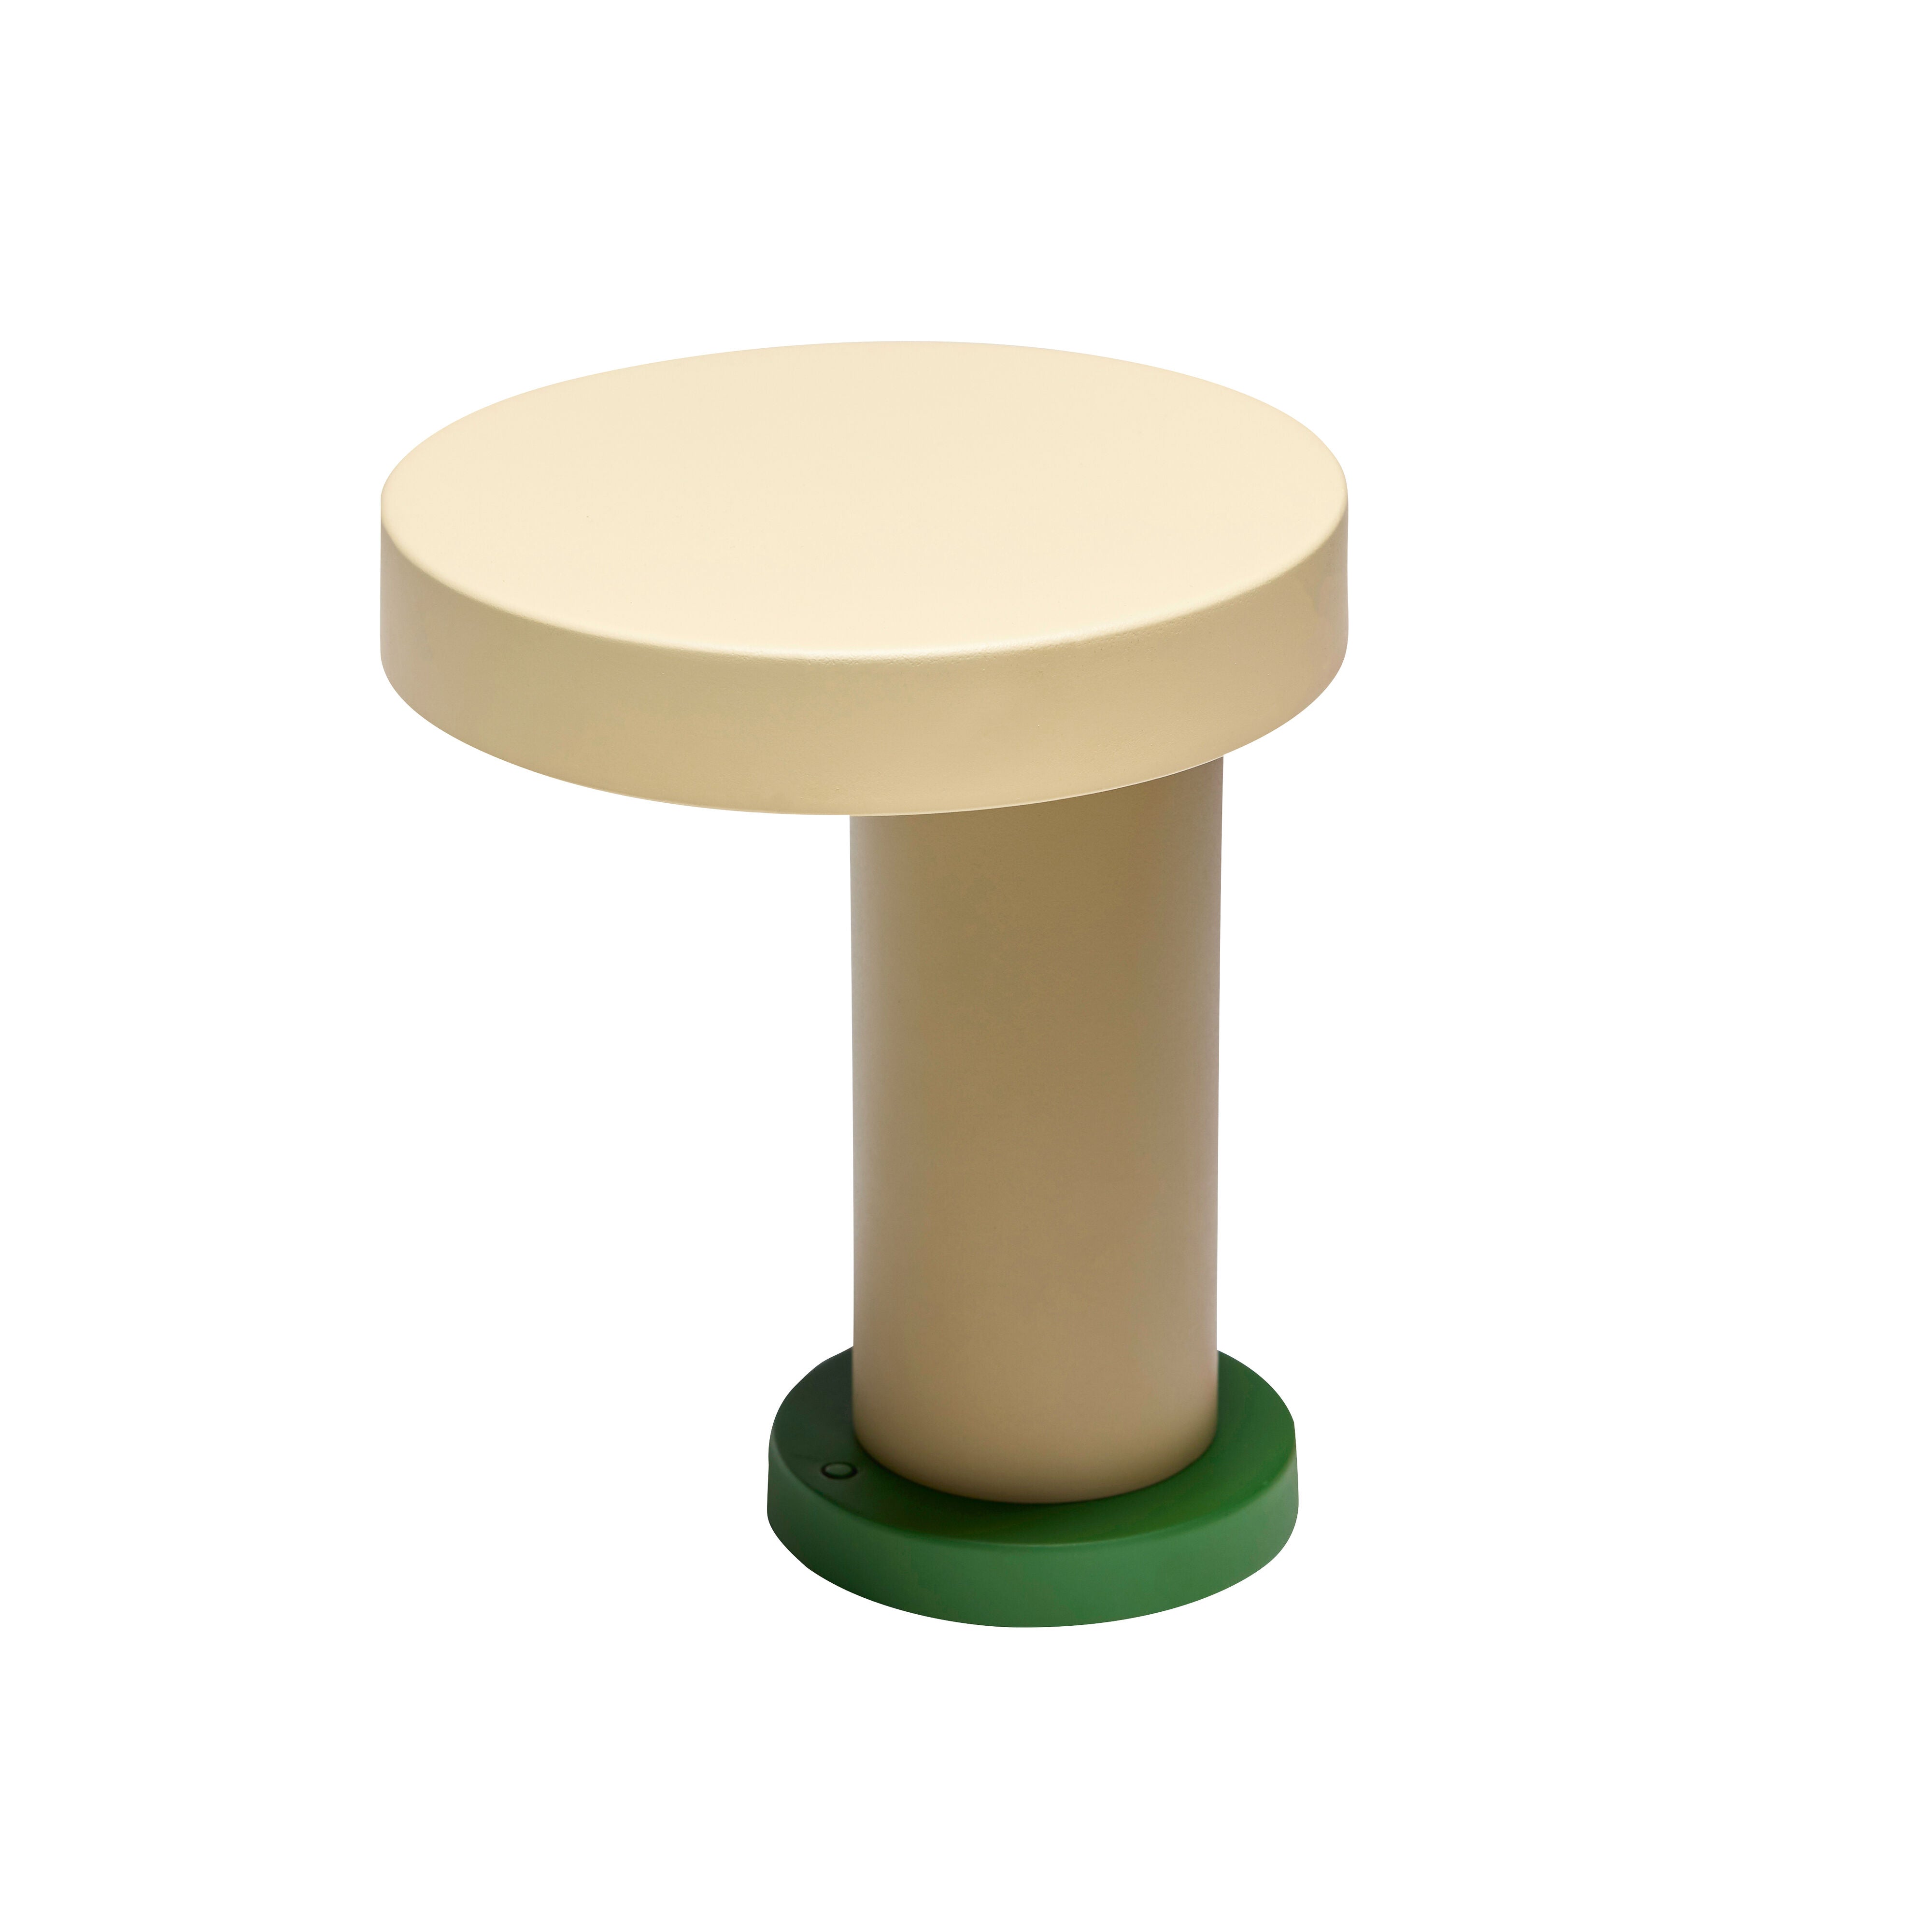 Magic table lamp green/olive